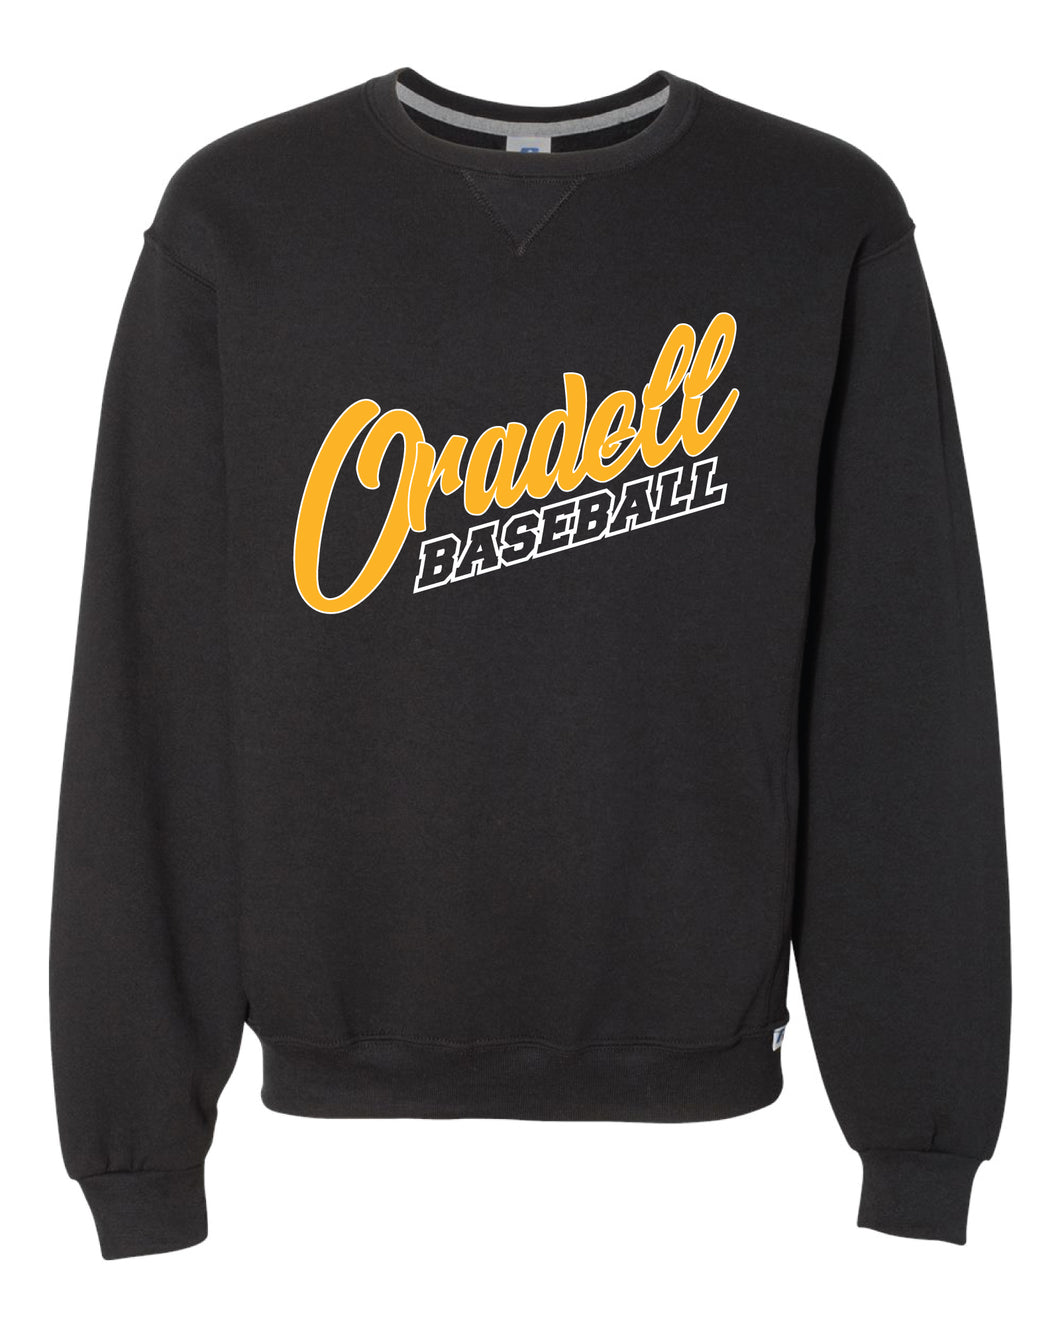 Oradell Baseball Russell Athletic Cotton Crewneck Sweatshirt - Black